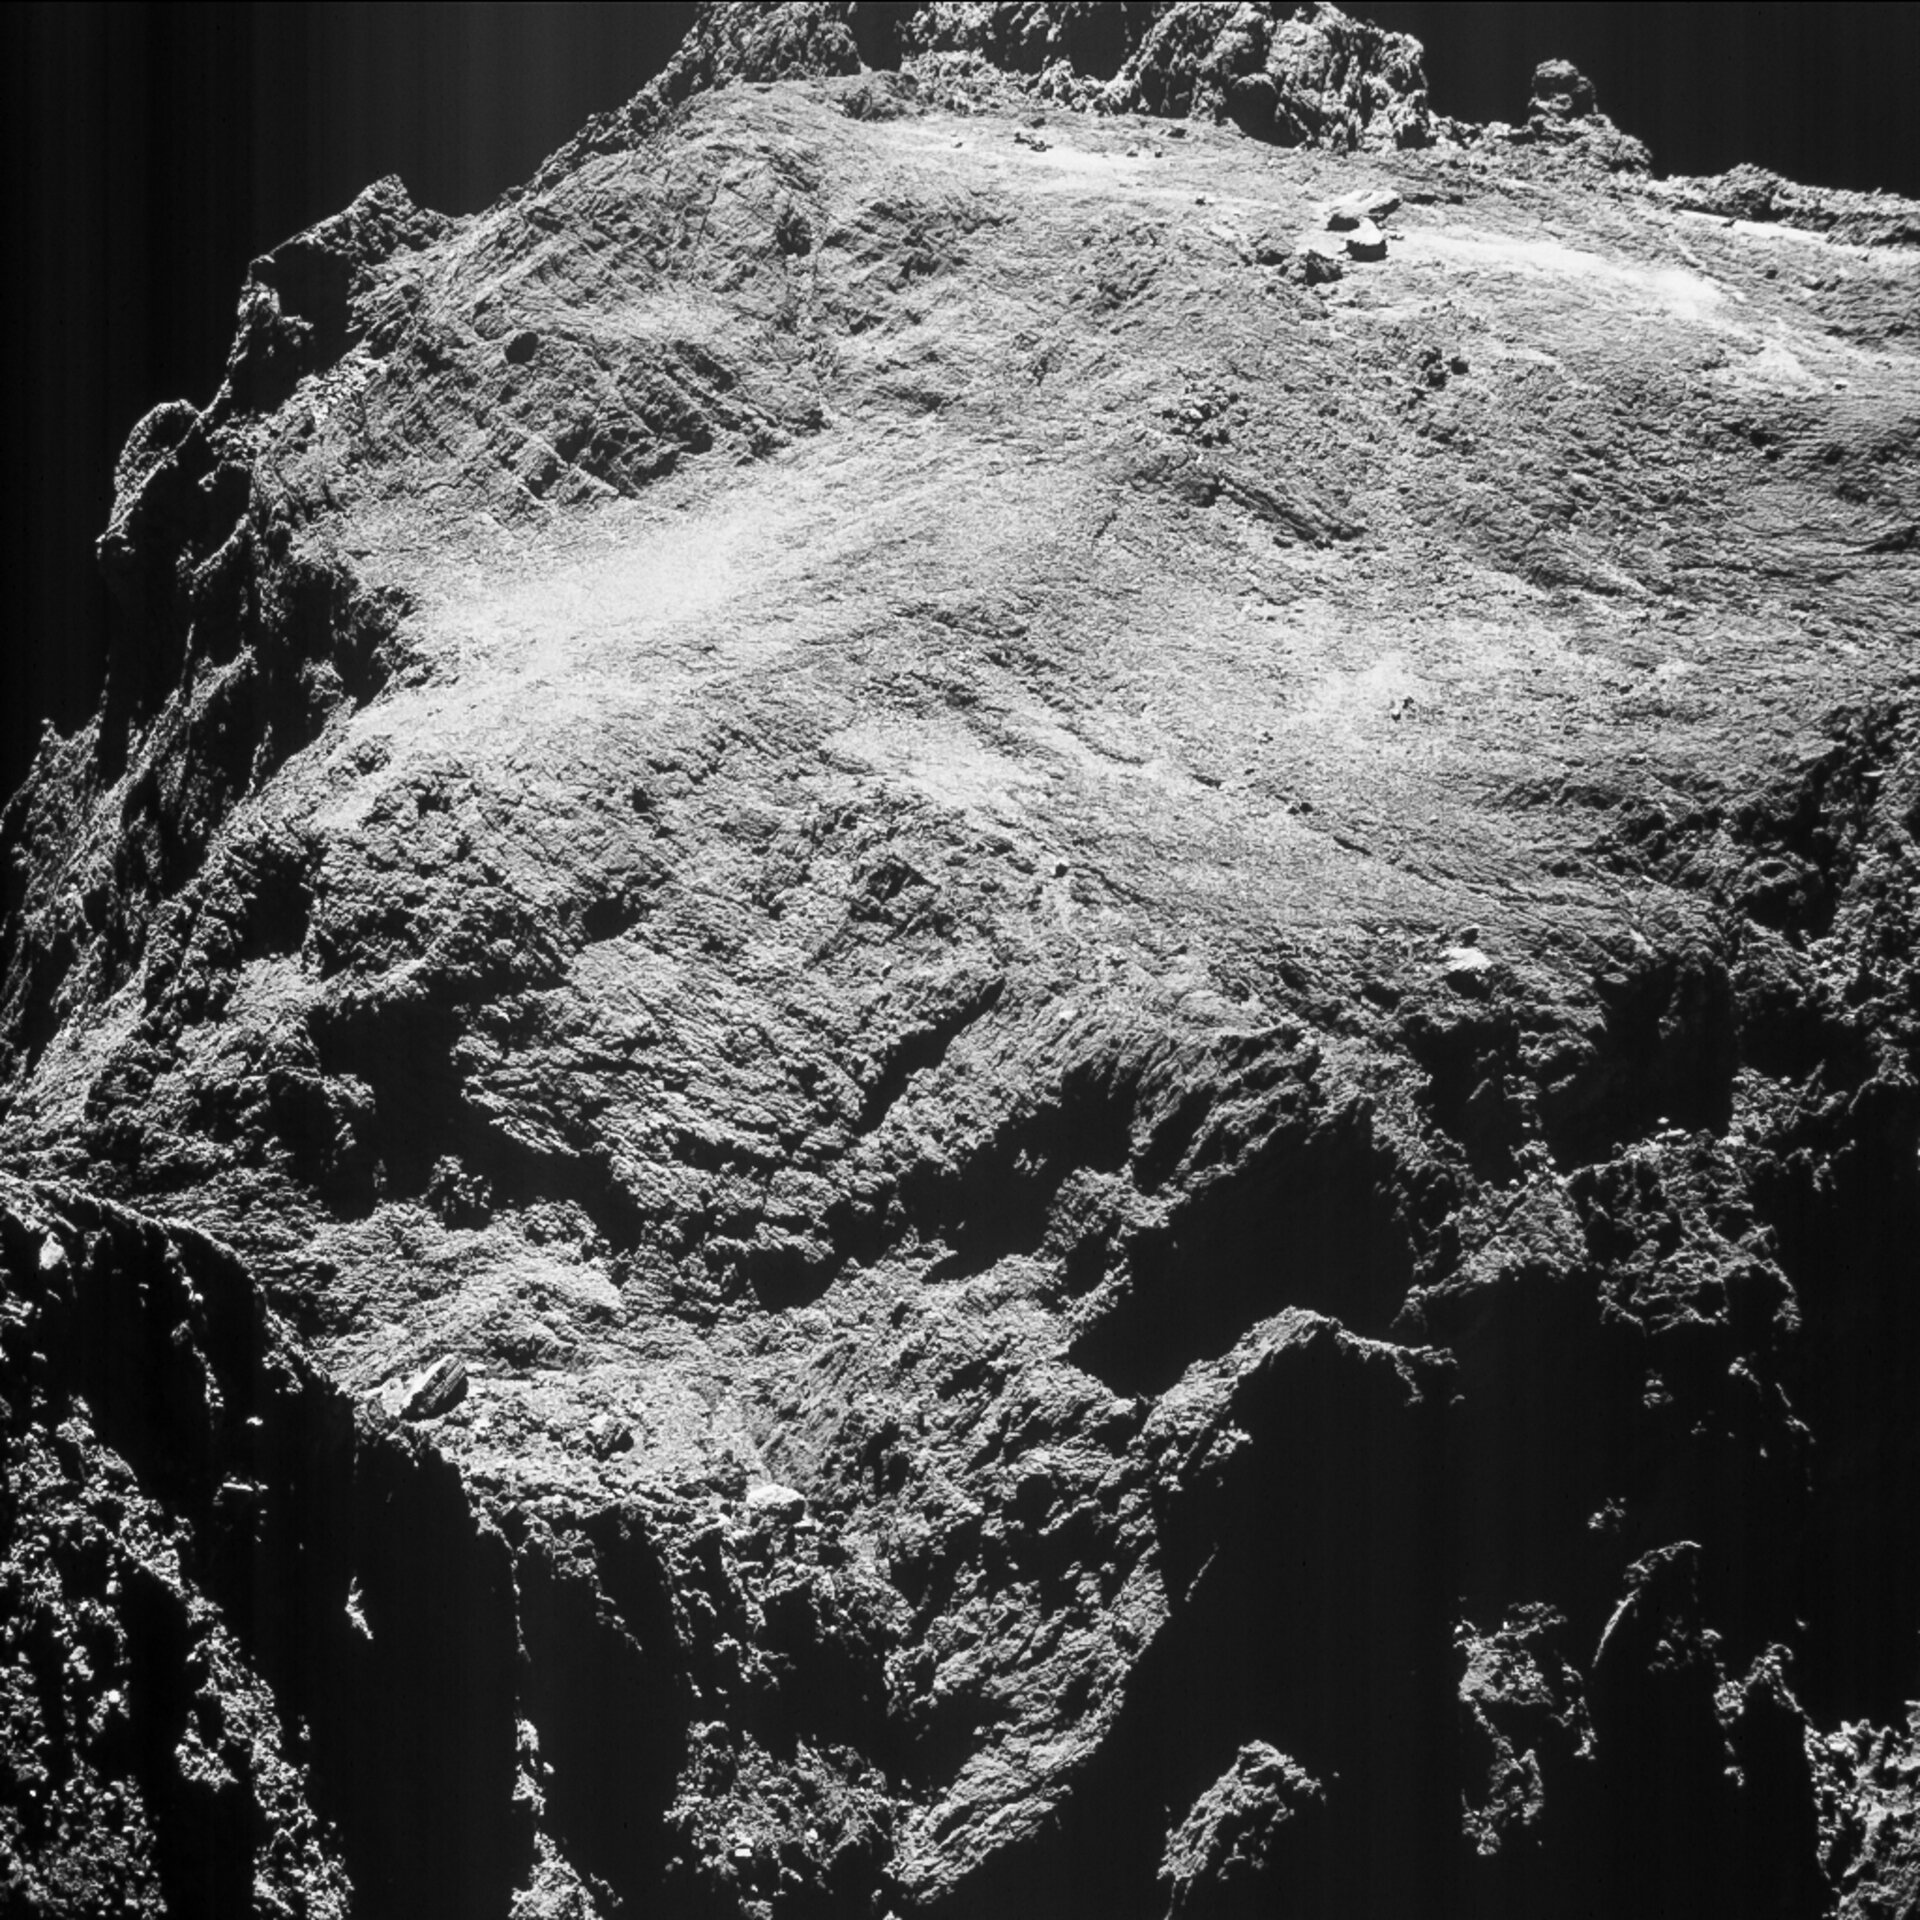 Comet on 15 May 2016 – NavCam